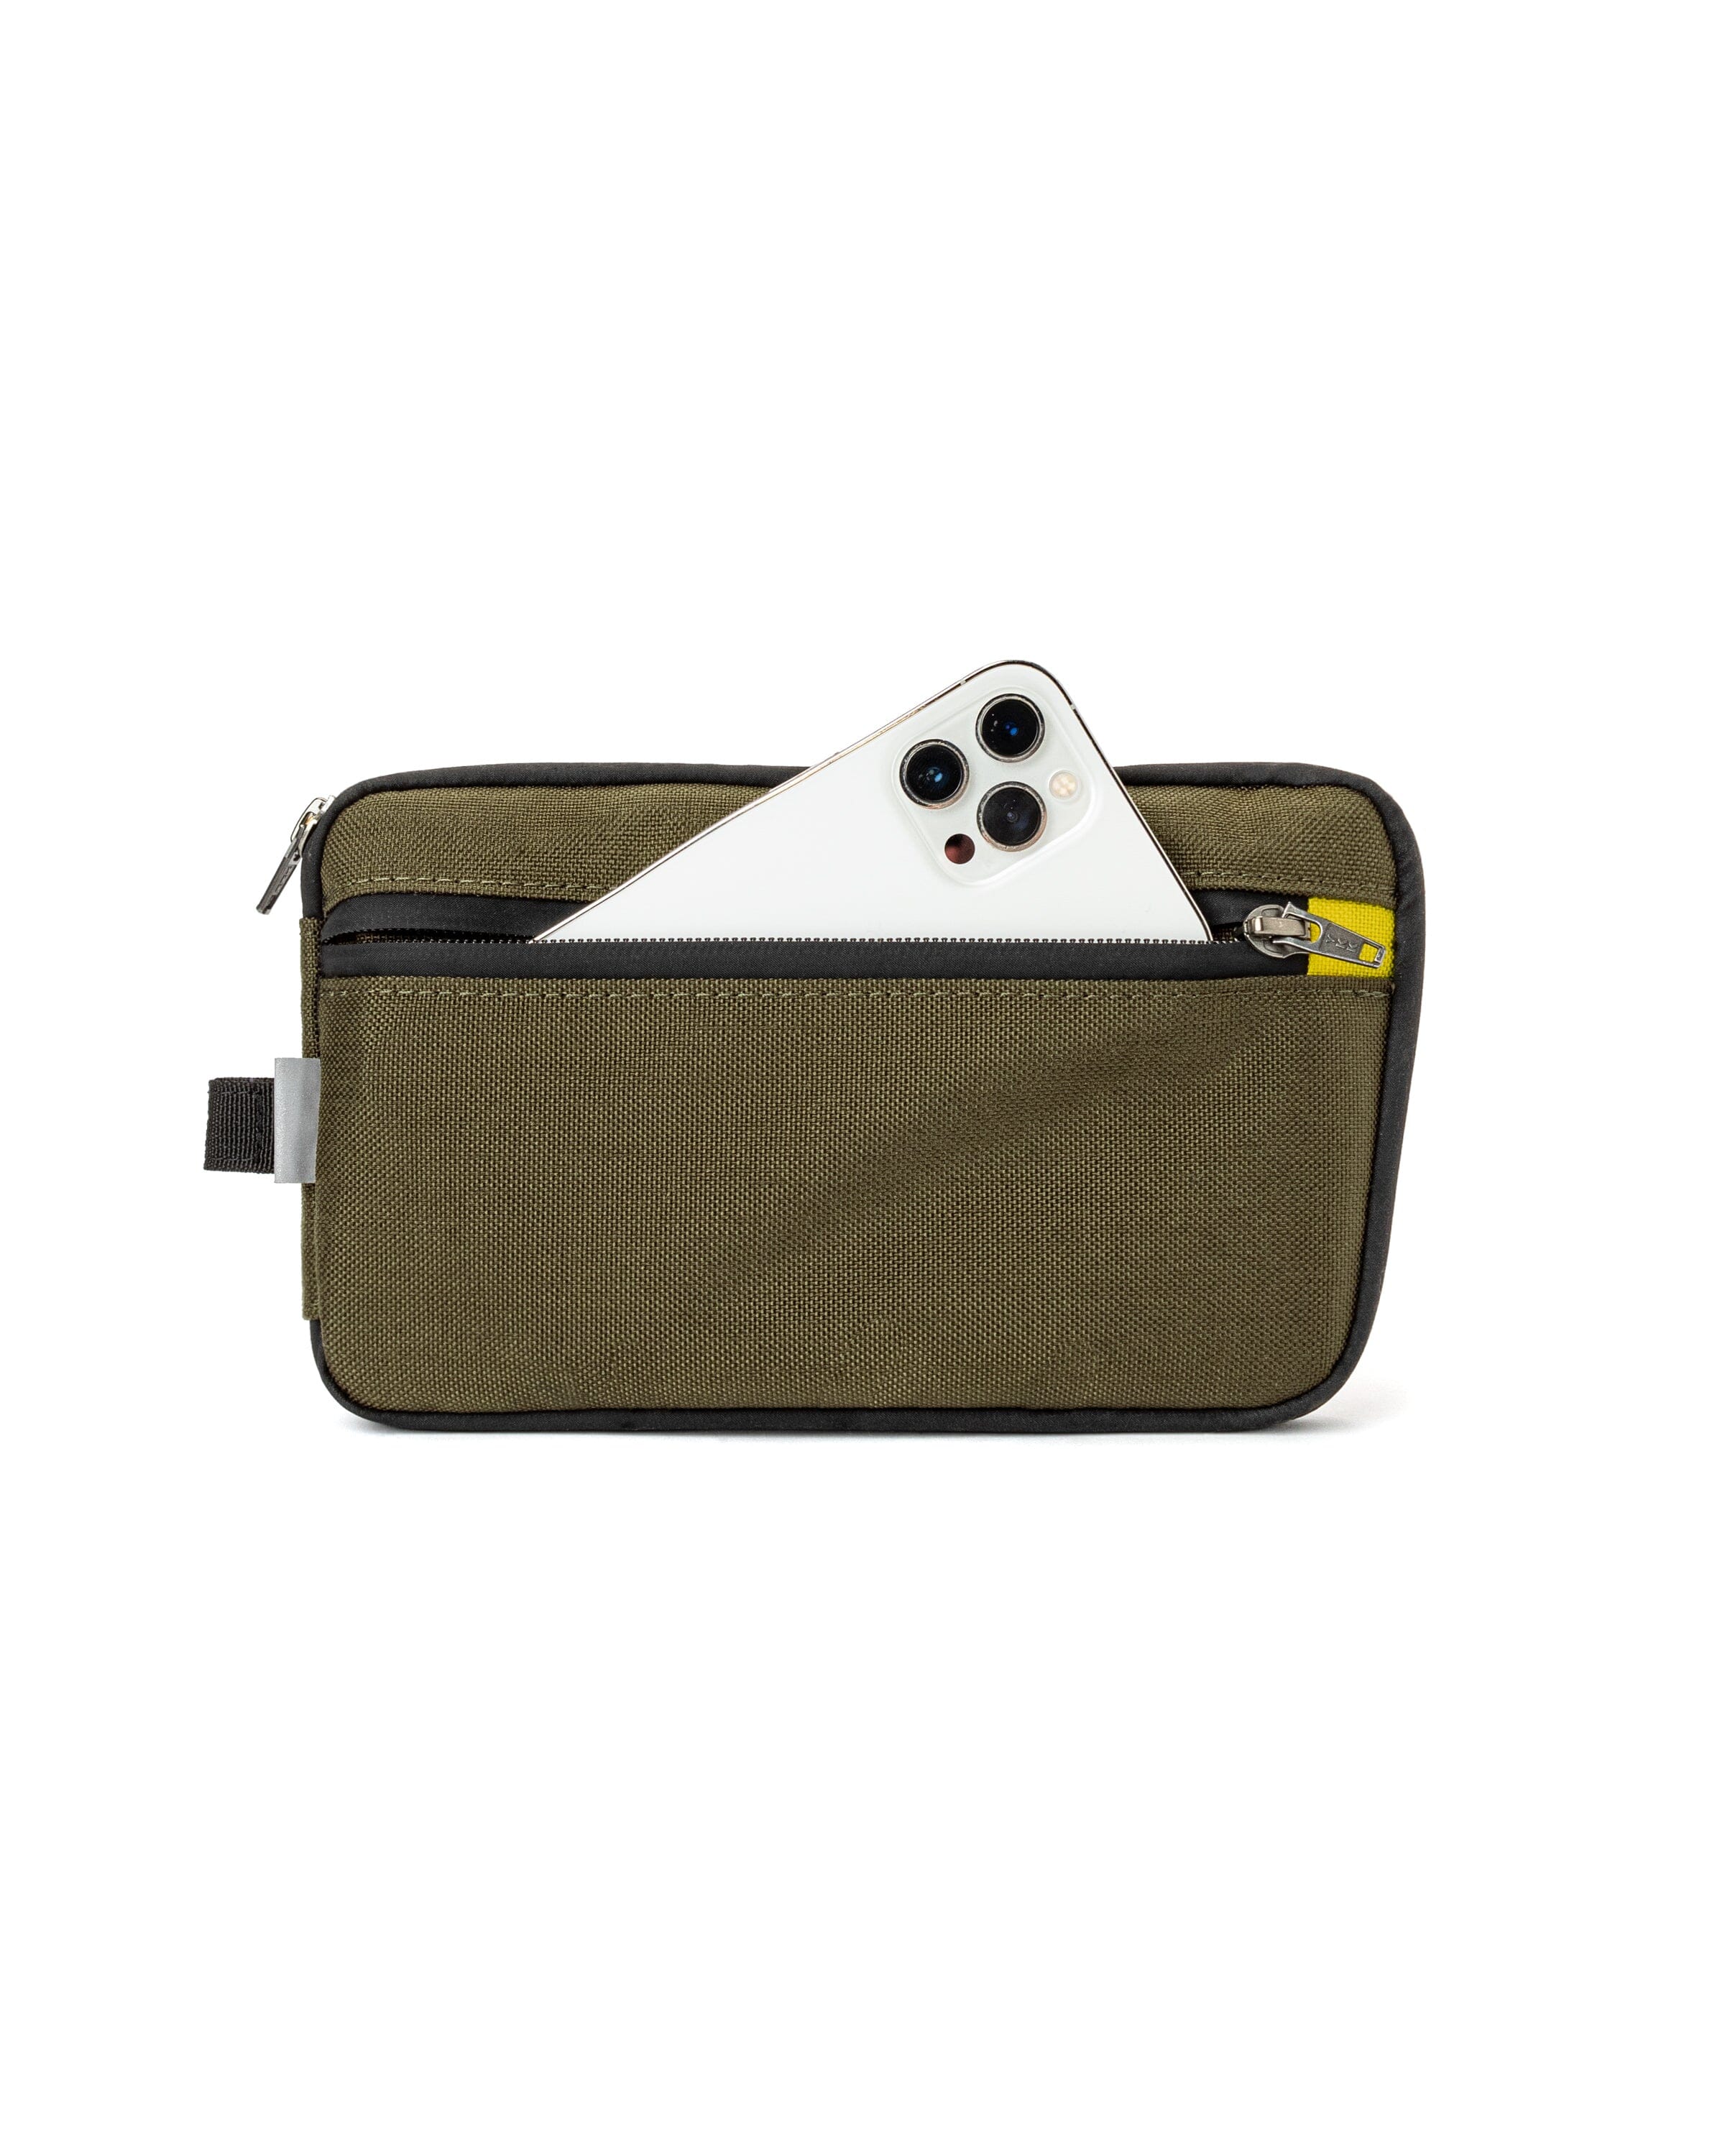 AUX™ Pocket - Defiant Olive Cordura Bag bolstr Ranger Green/Yellow No Strap 